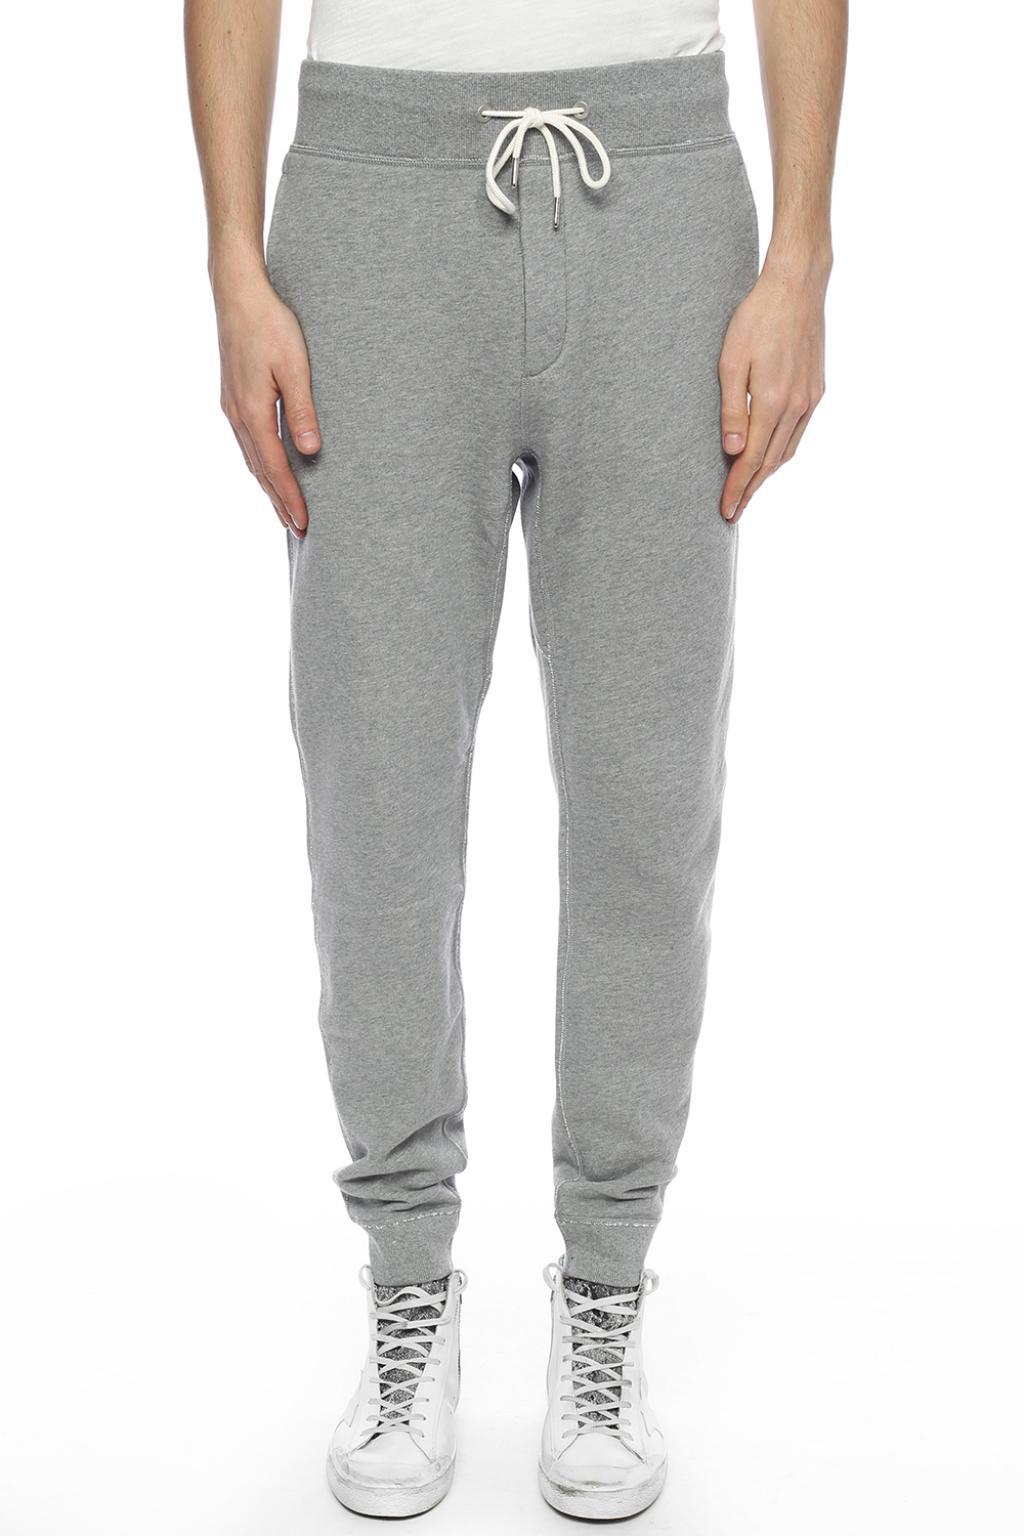 Rag & Bone Cotton Sweatpants in Grey (Gray) for Men - Lyst